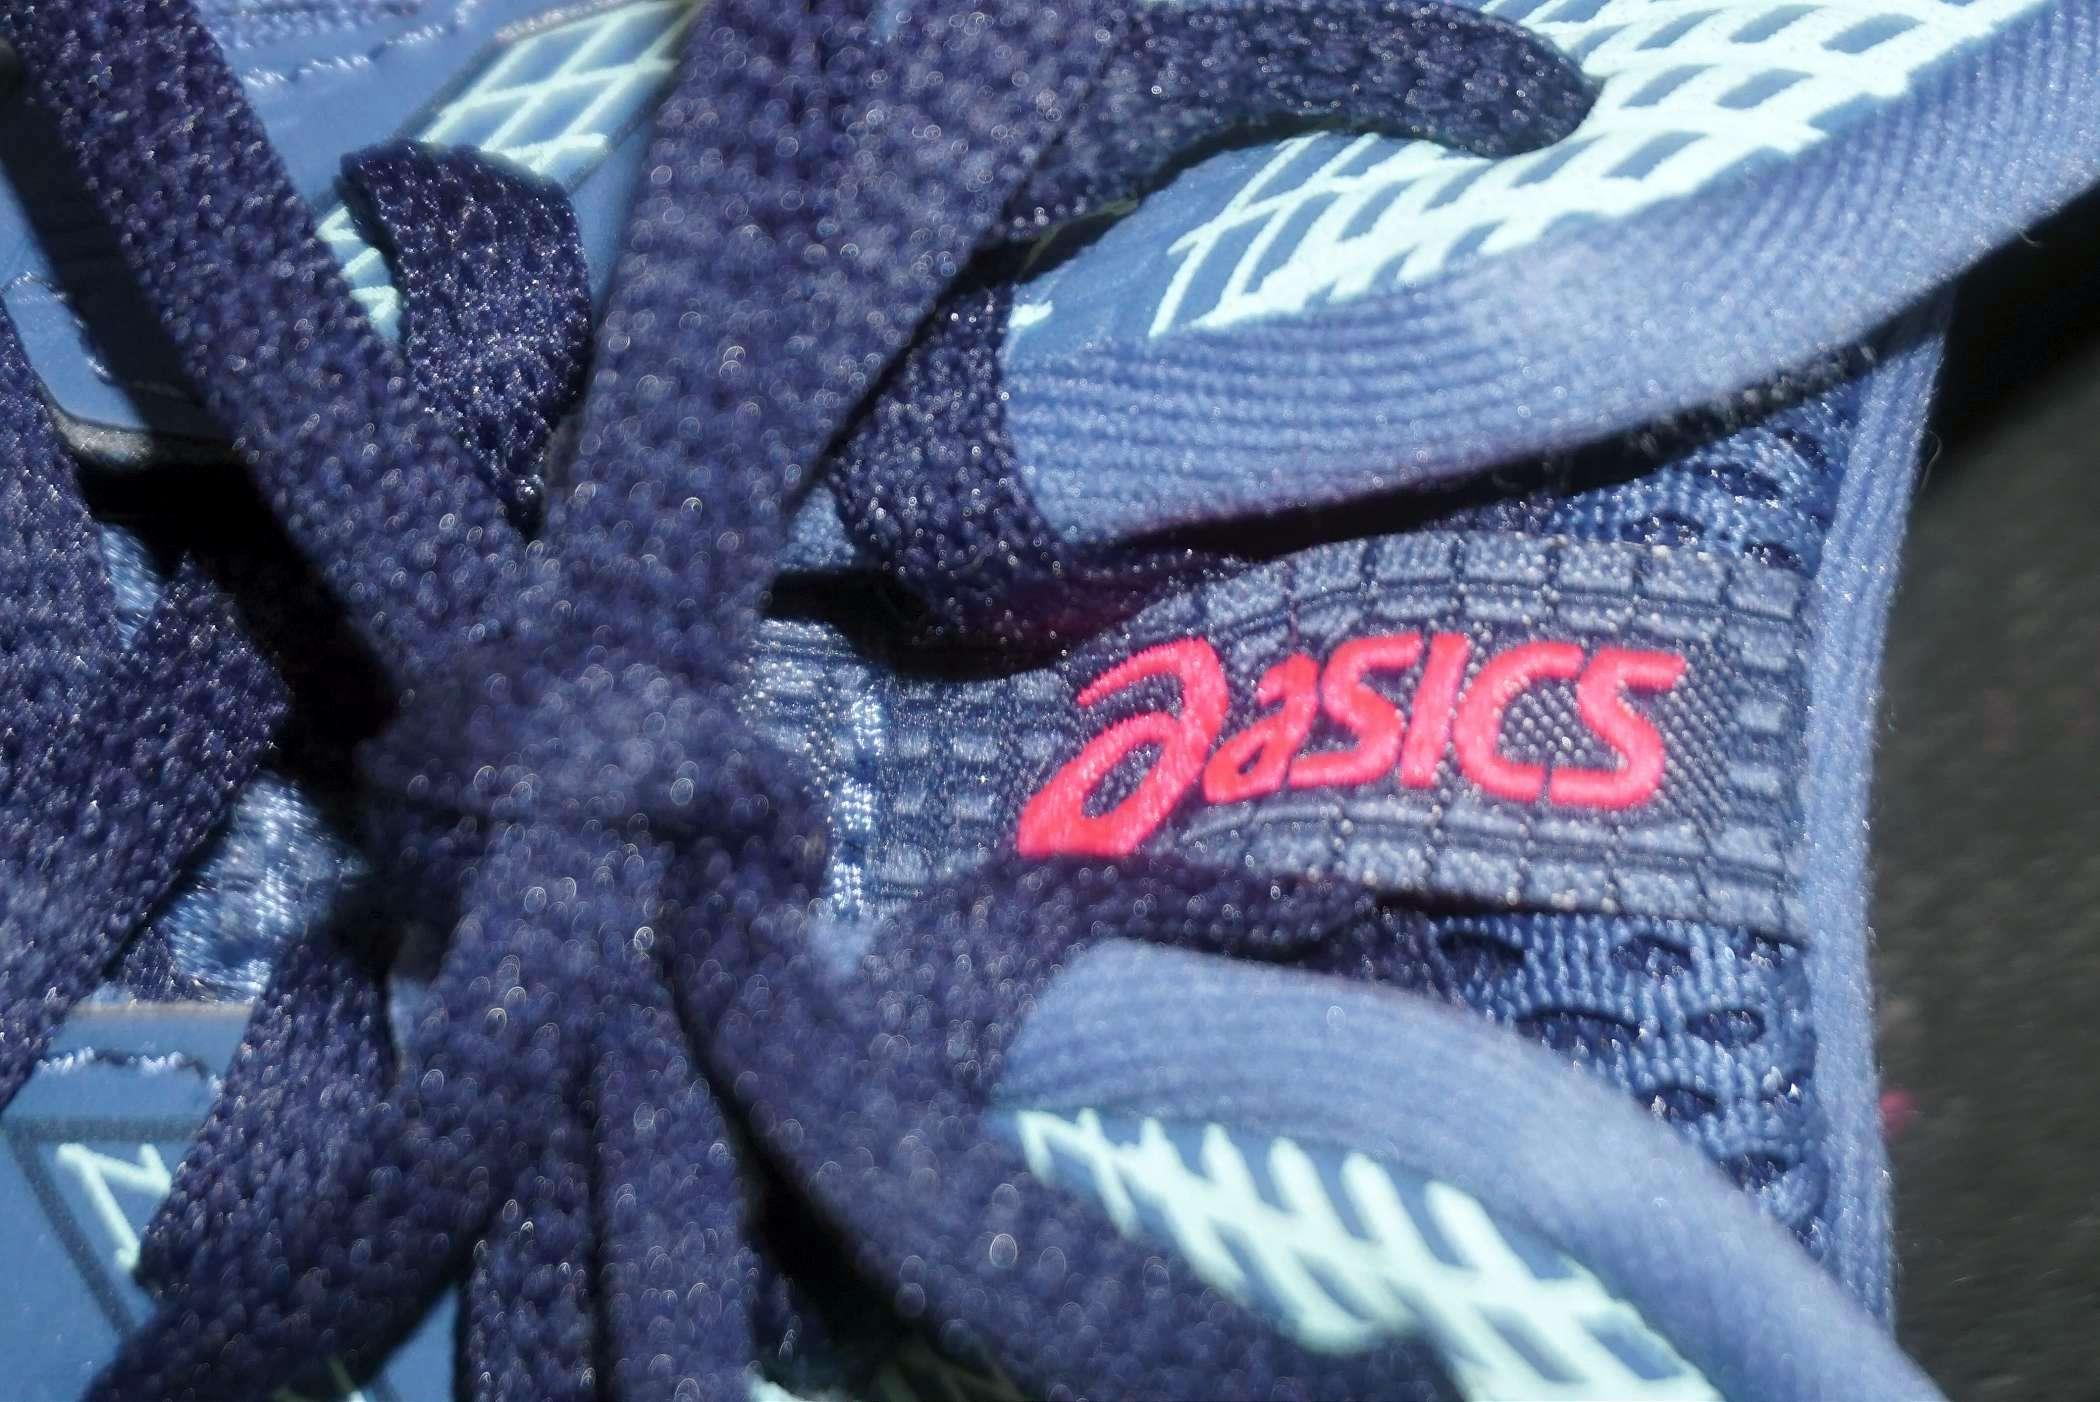 Asics Tennis Shoes (Size 11)